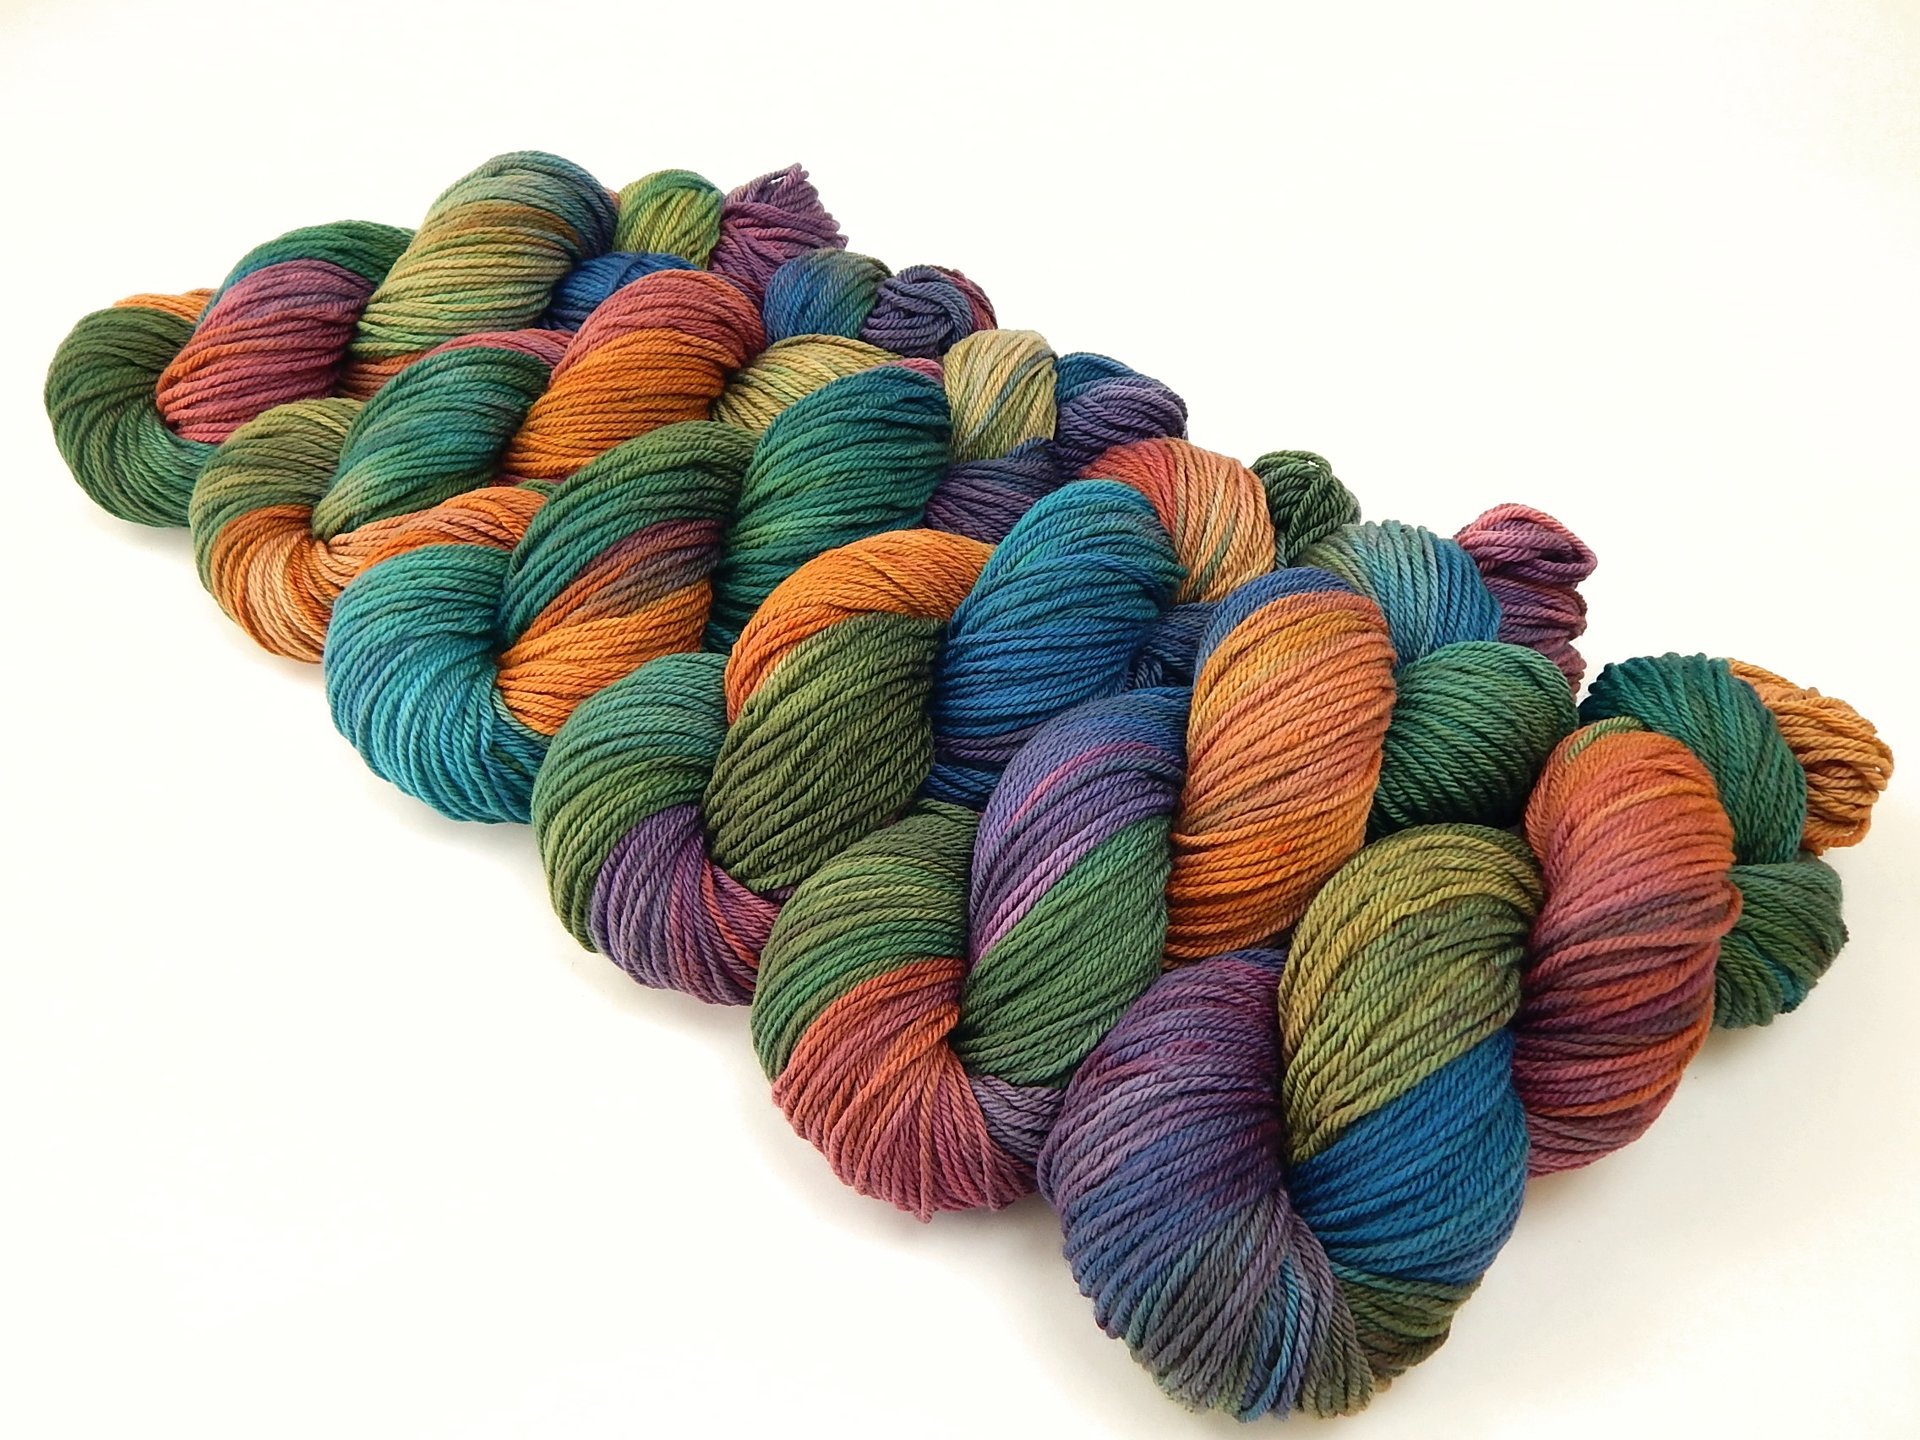 Worsted Weight Hand Dyed Yarn - 100% Superwash Merino Wool - Potluck Rainbow - Indie Dyer OOAK Knitting Crochet Yarn, Deep Rich Vibrant Colors